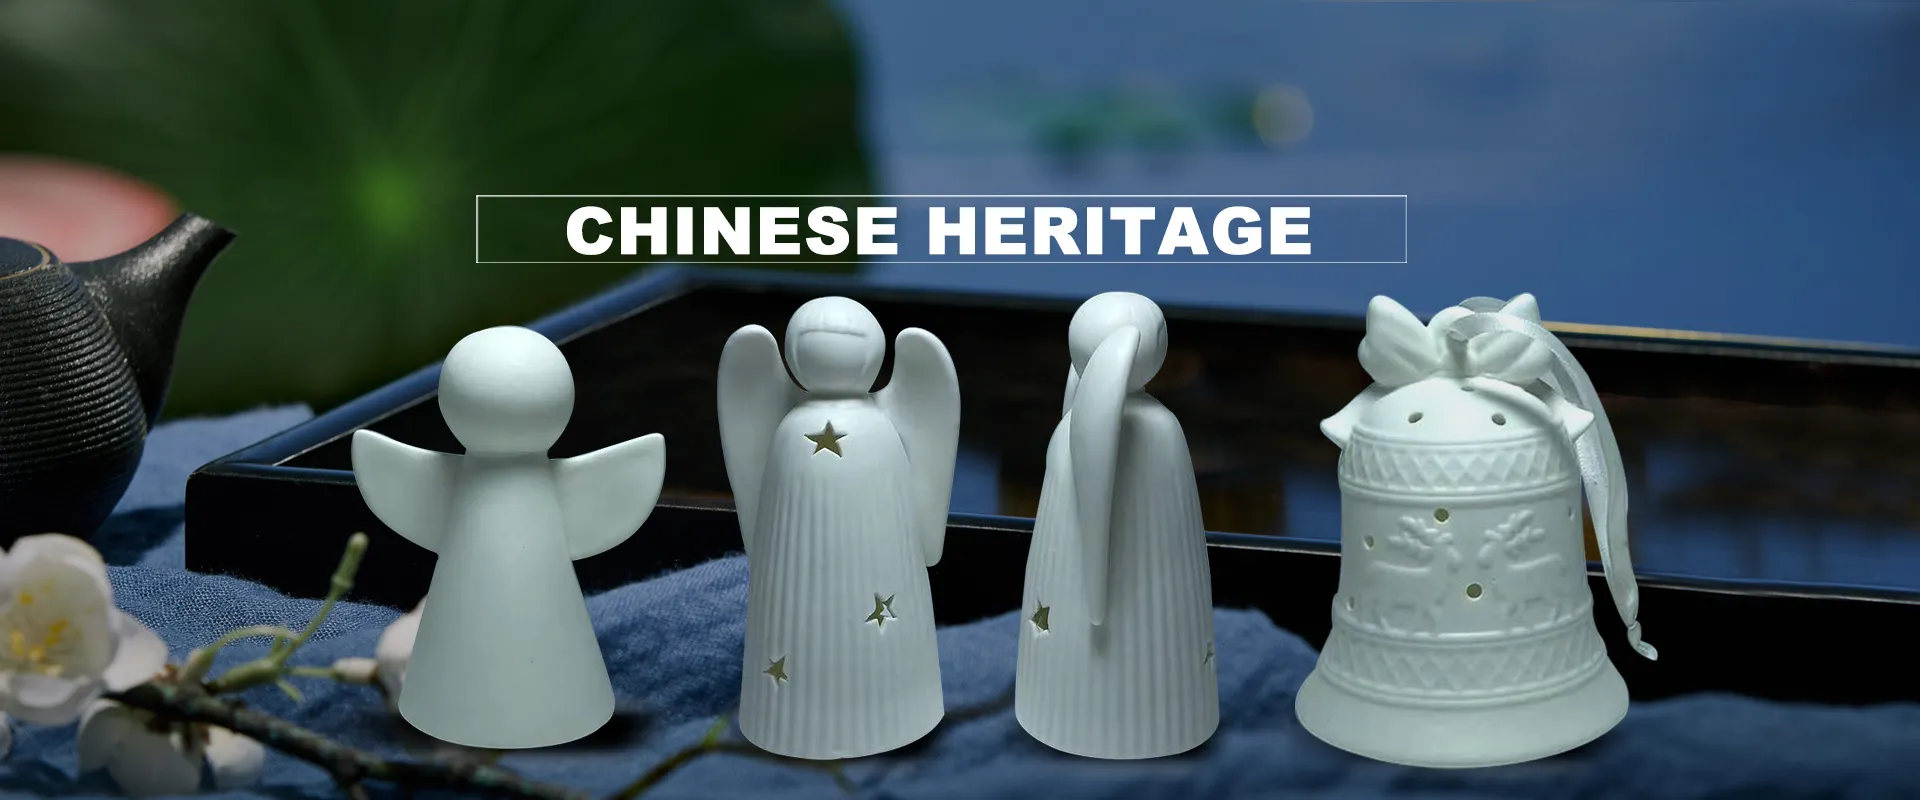 kinesisk arv